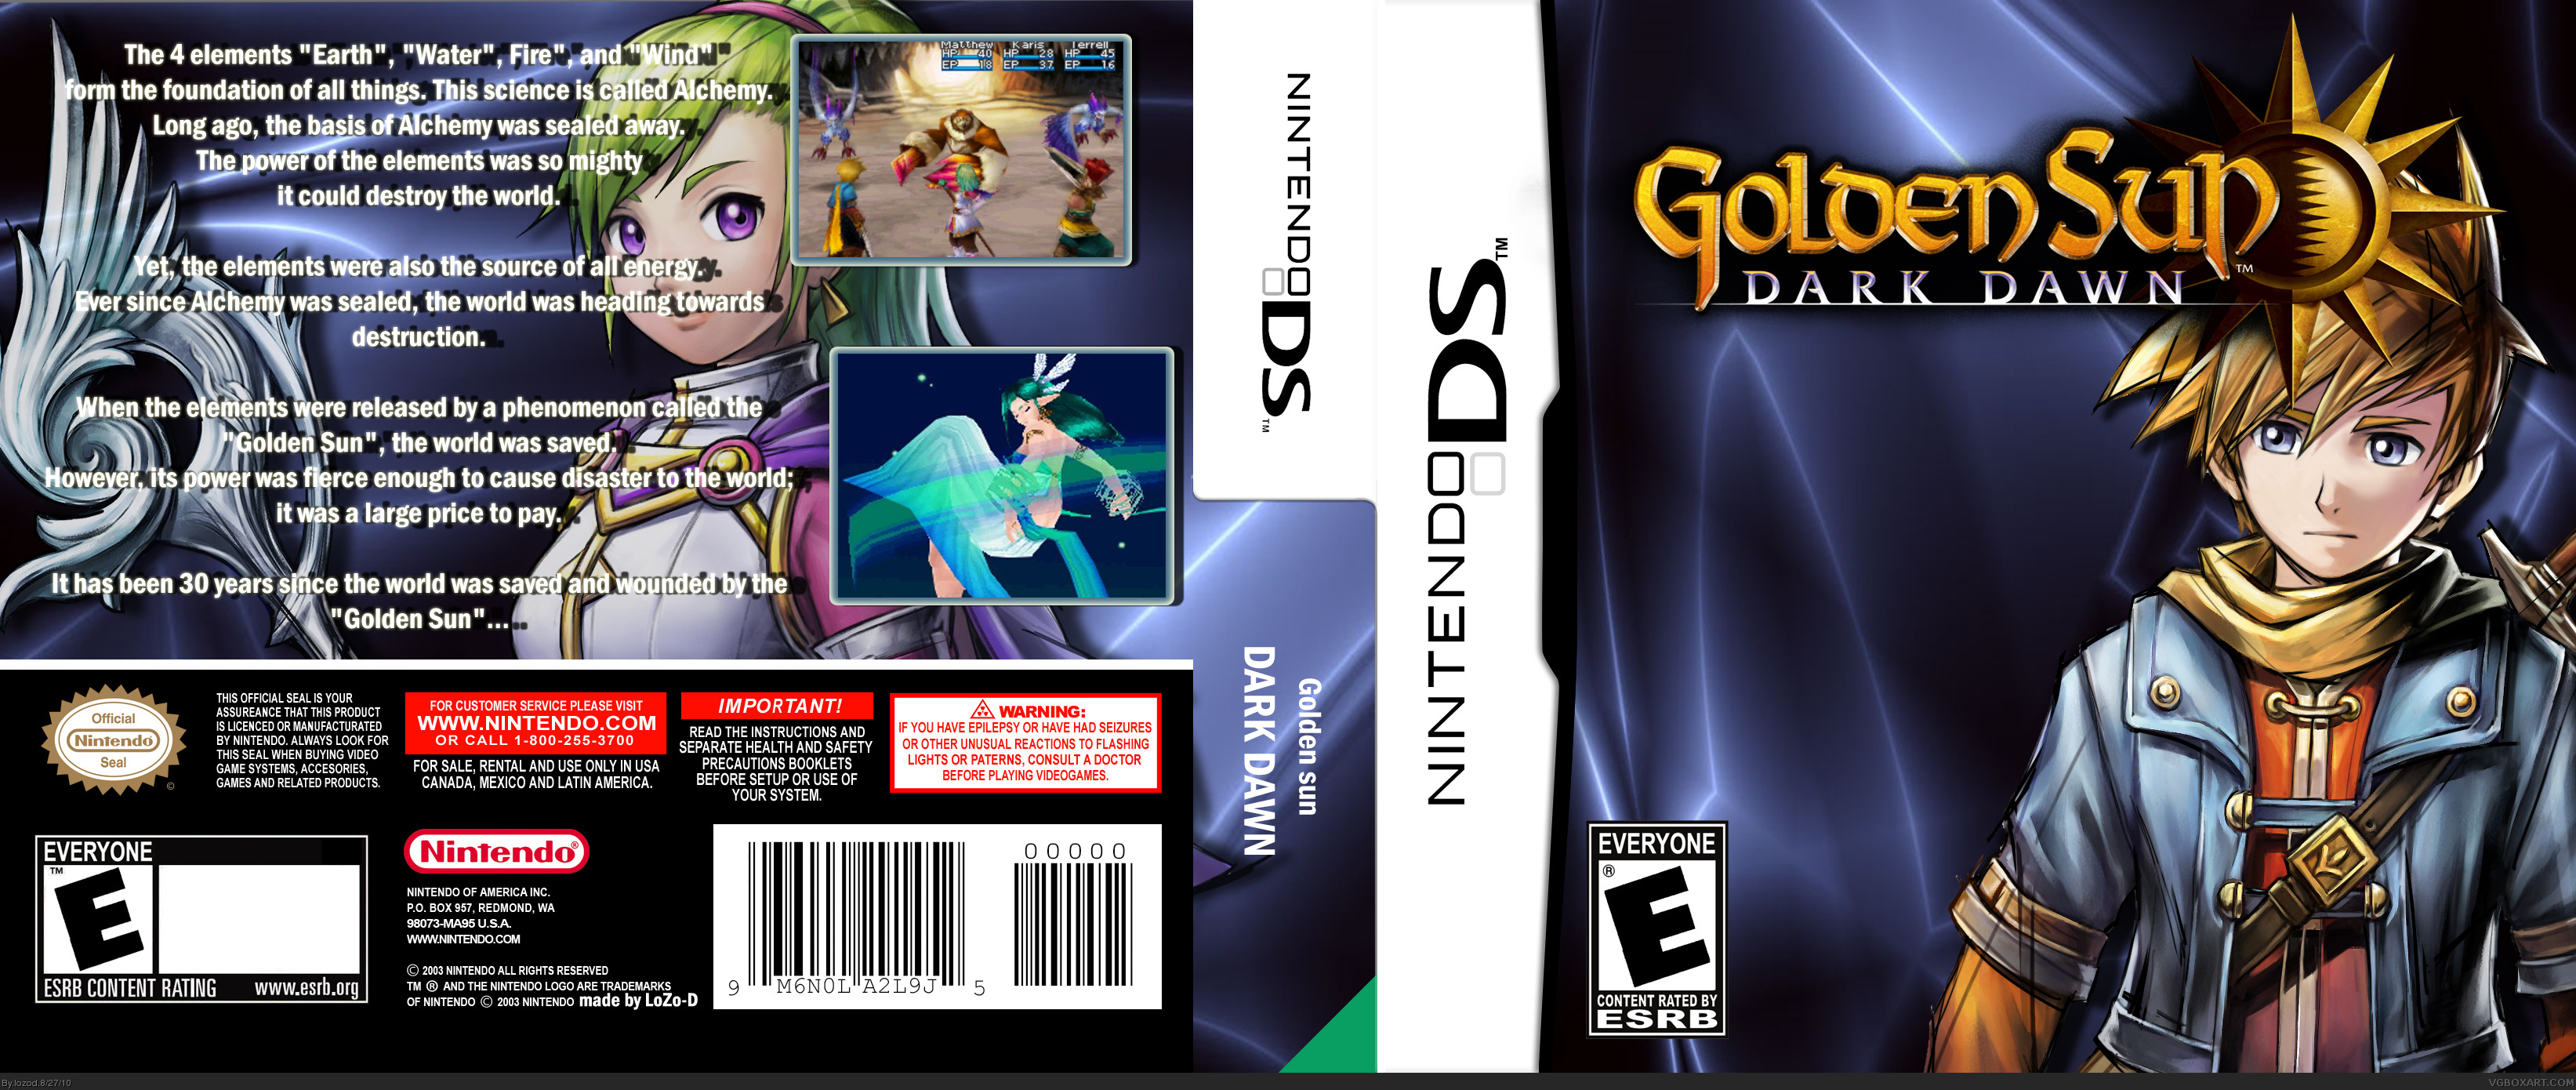 Golden Sun: Dark Dawn Nintendo DS Box Art Cover by lozod3286 x 1390